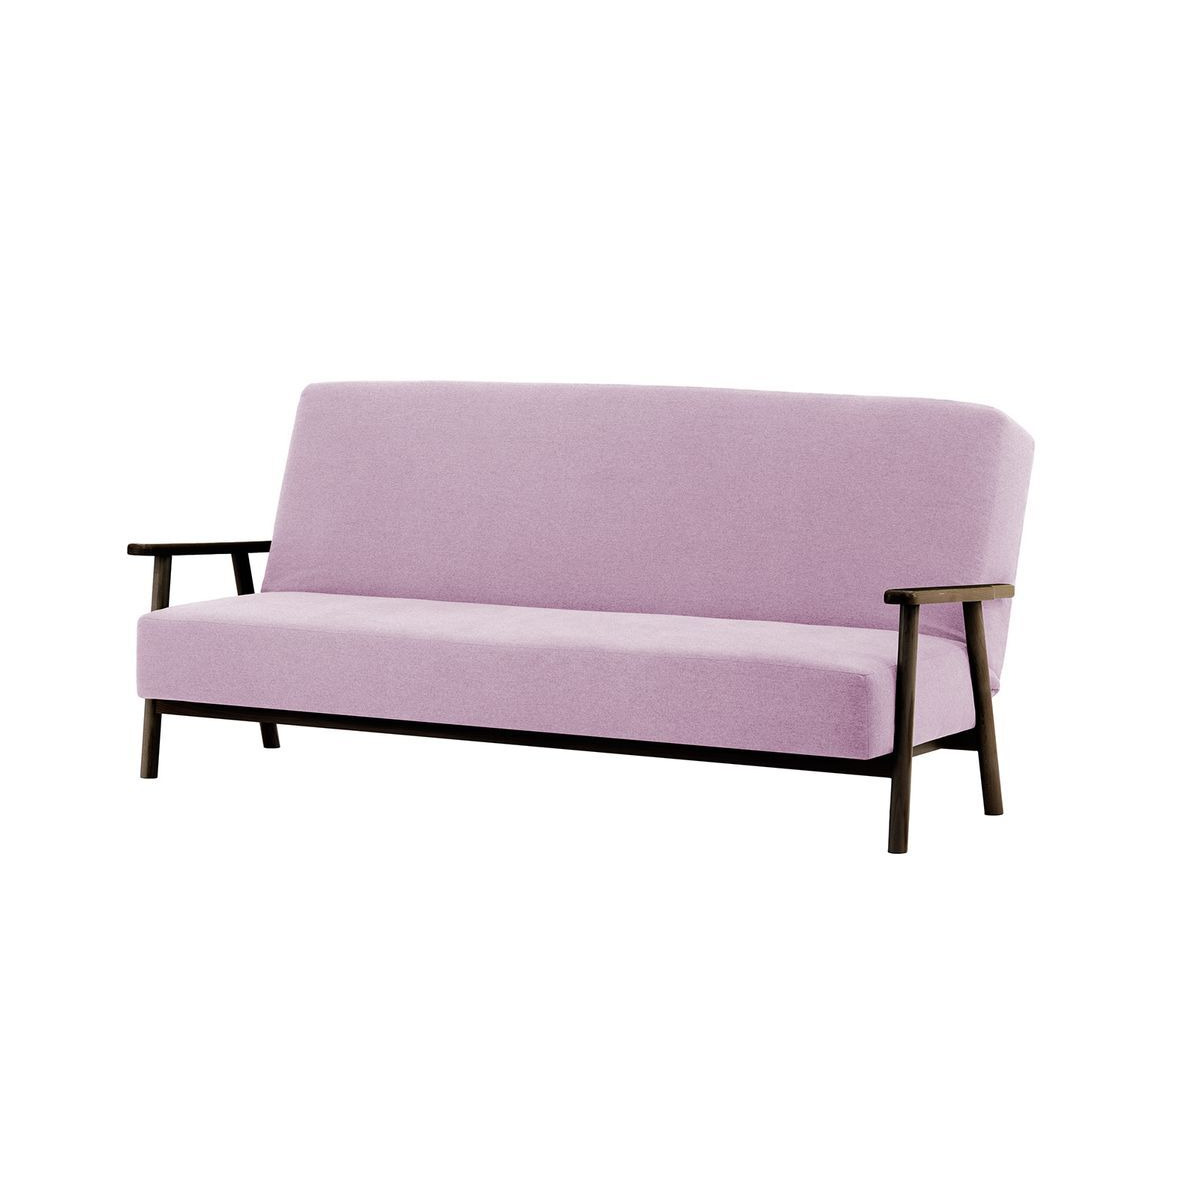 Luppo Click-Clack Folding Sofa Bed, pink, Leg colour: dark oak - image 1